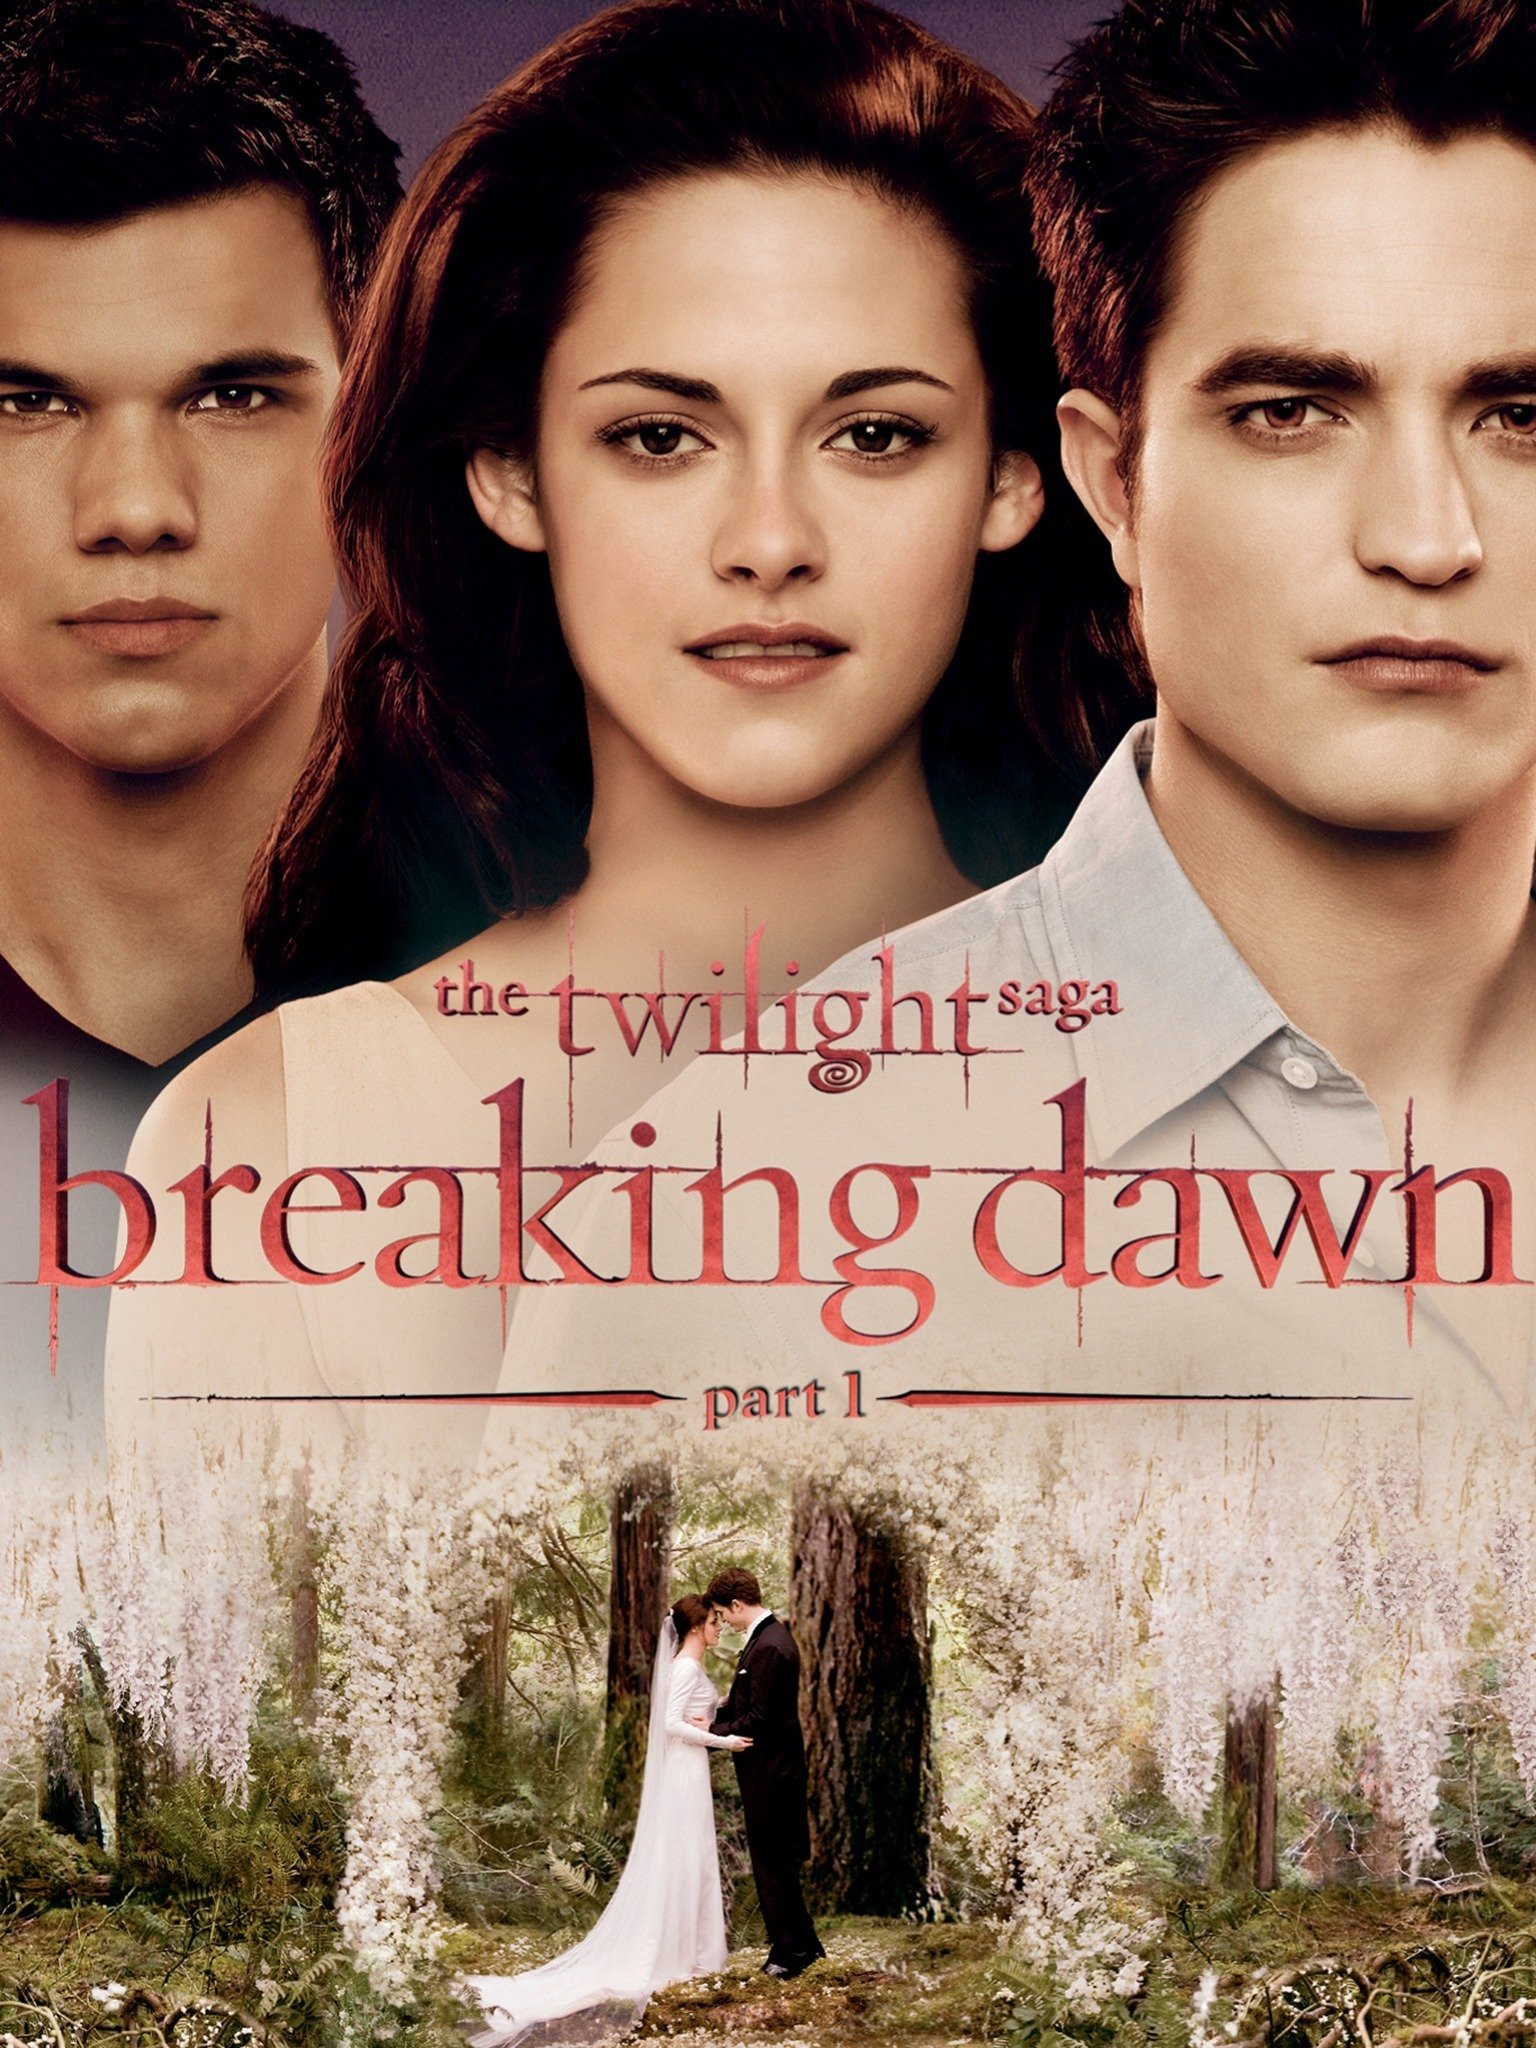 Download Film Twilight Breaking Dawn 2